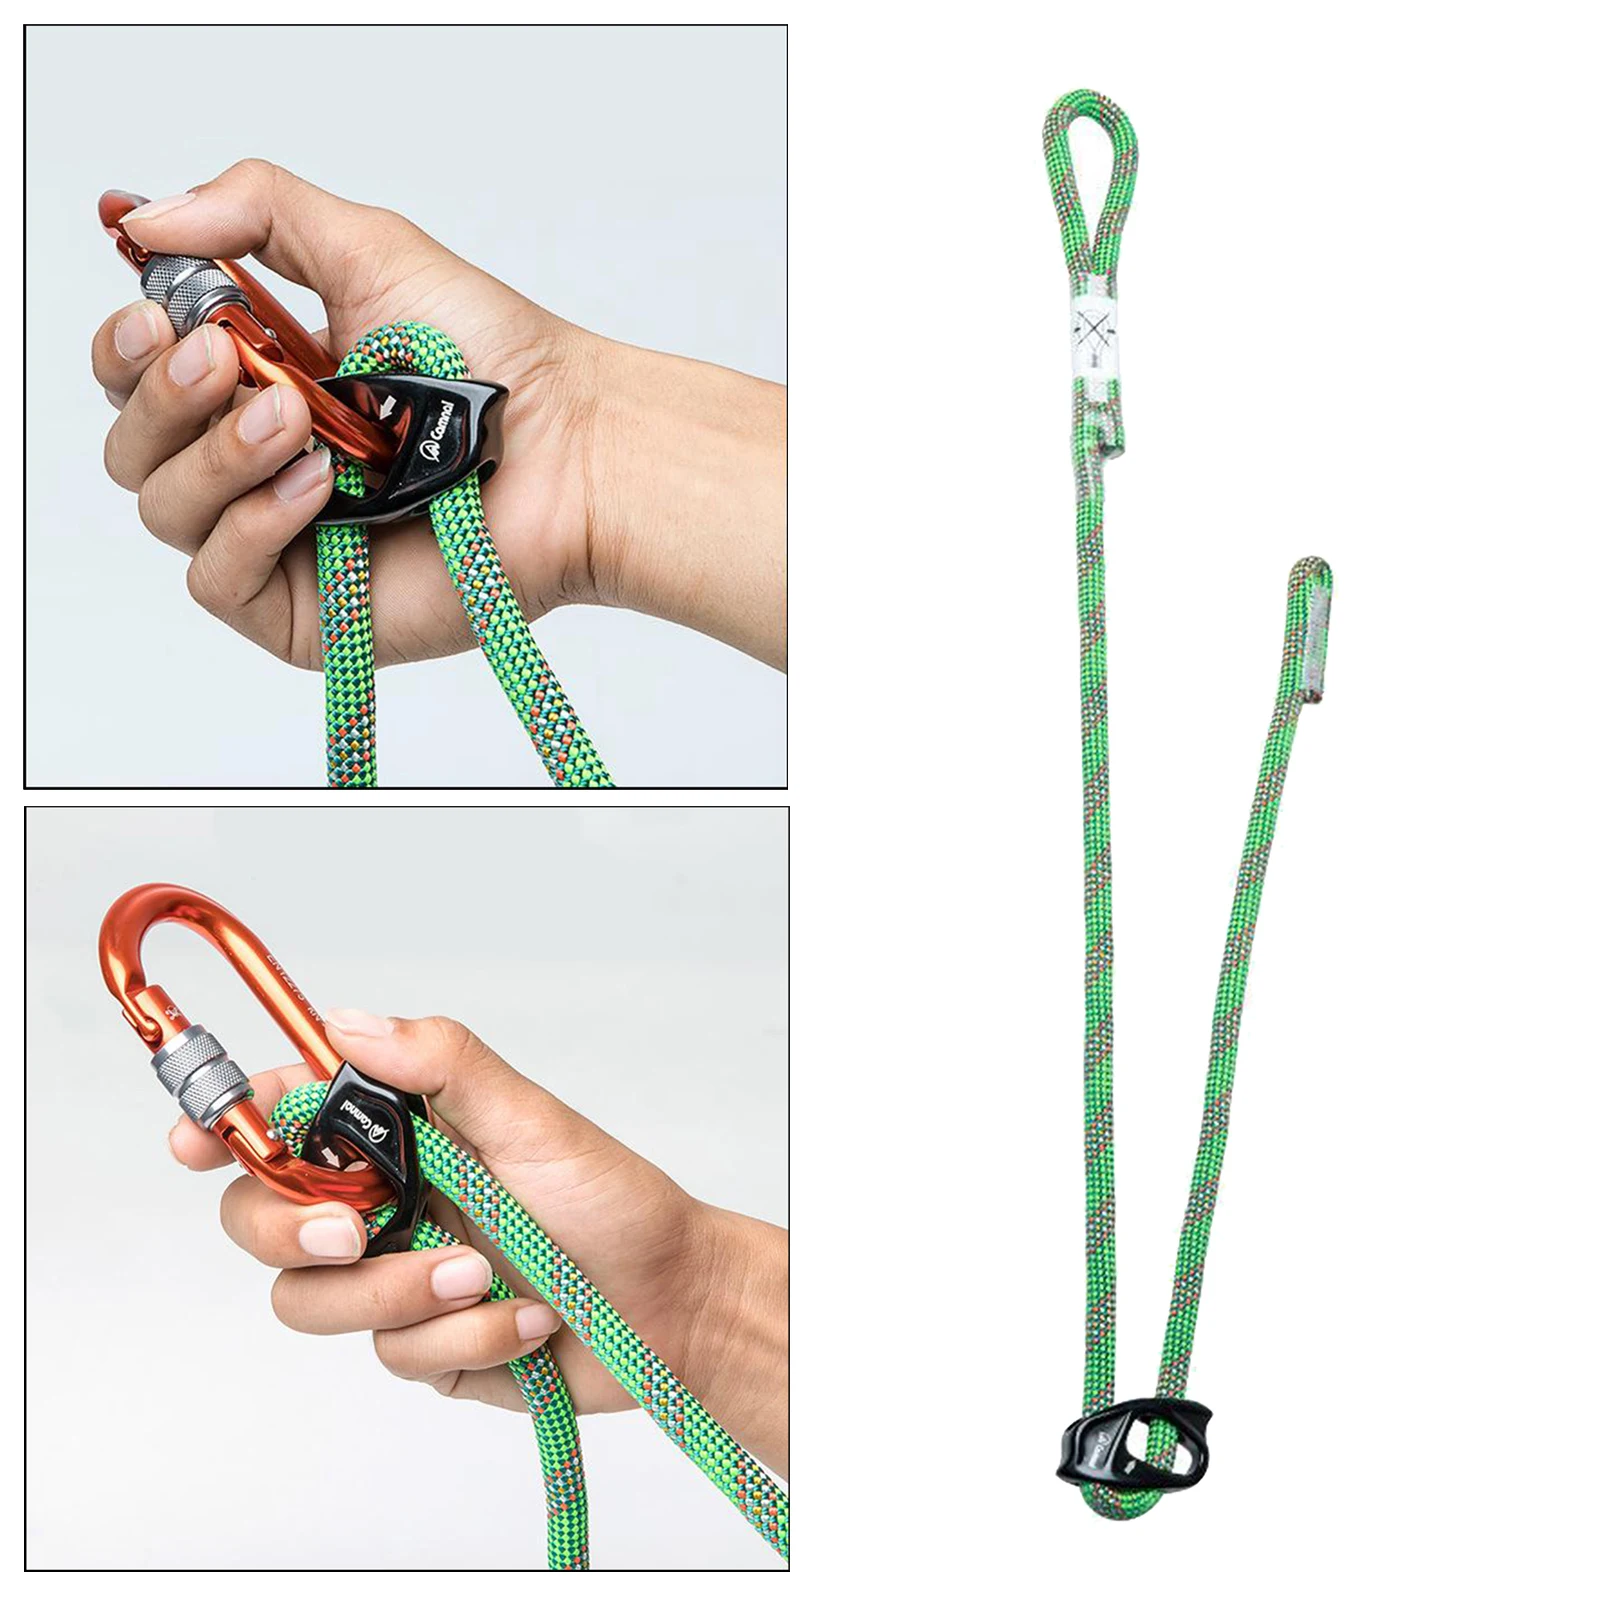 Dupont Line Rope Positioning Lanyard Aid Climbing Straps Adjustable 15-95cm